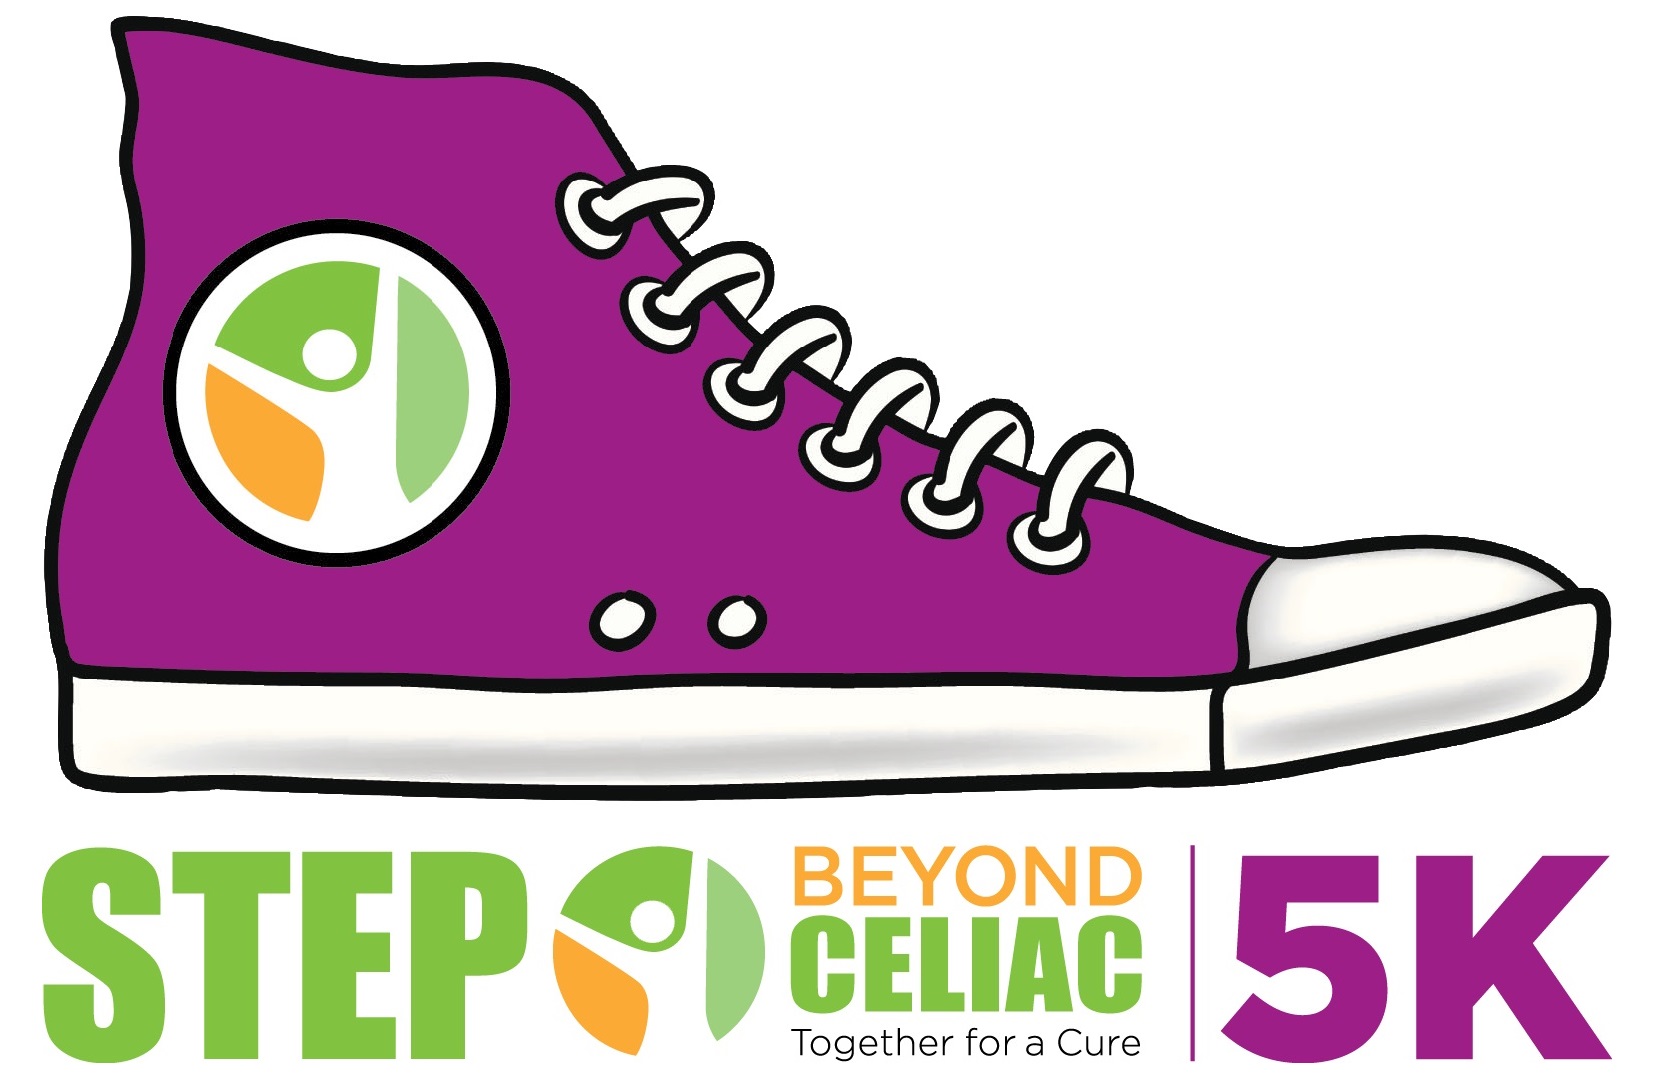 17-captivating-facts-about-step-beyond-celiac-5k